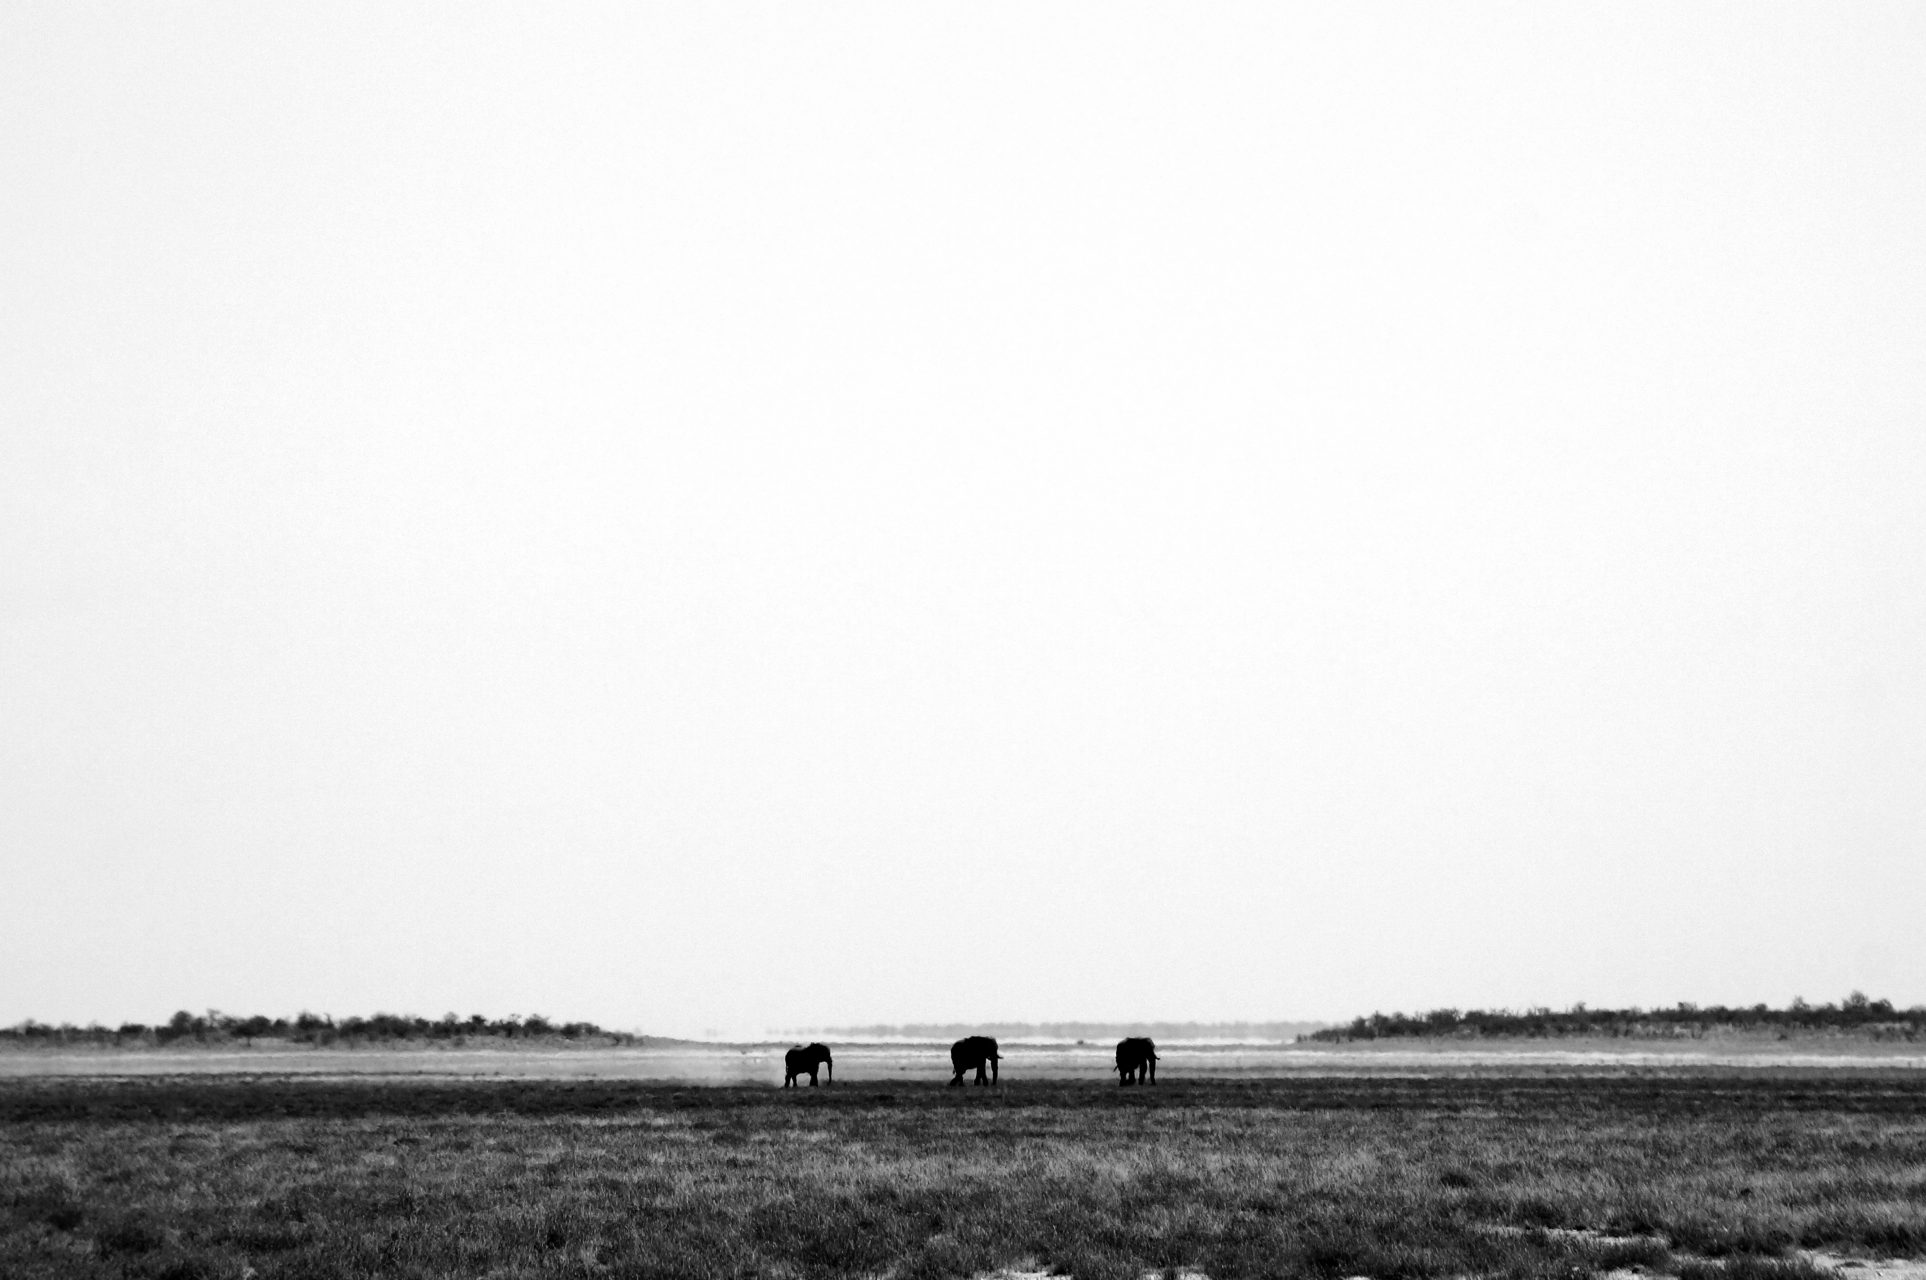 Elephants on the horizon